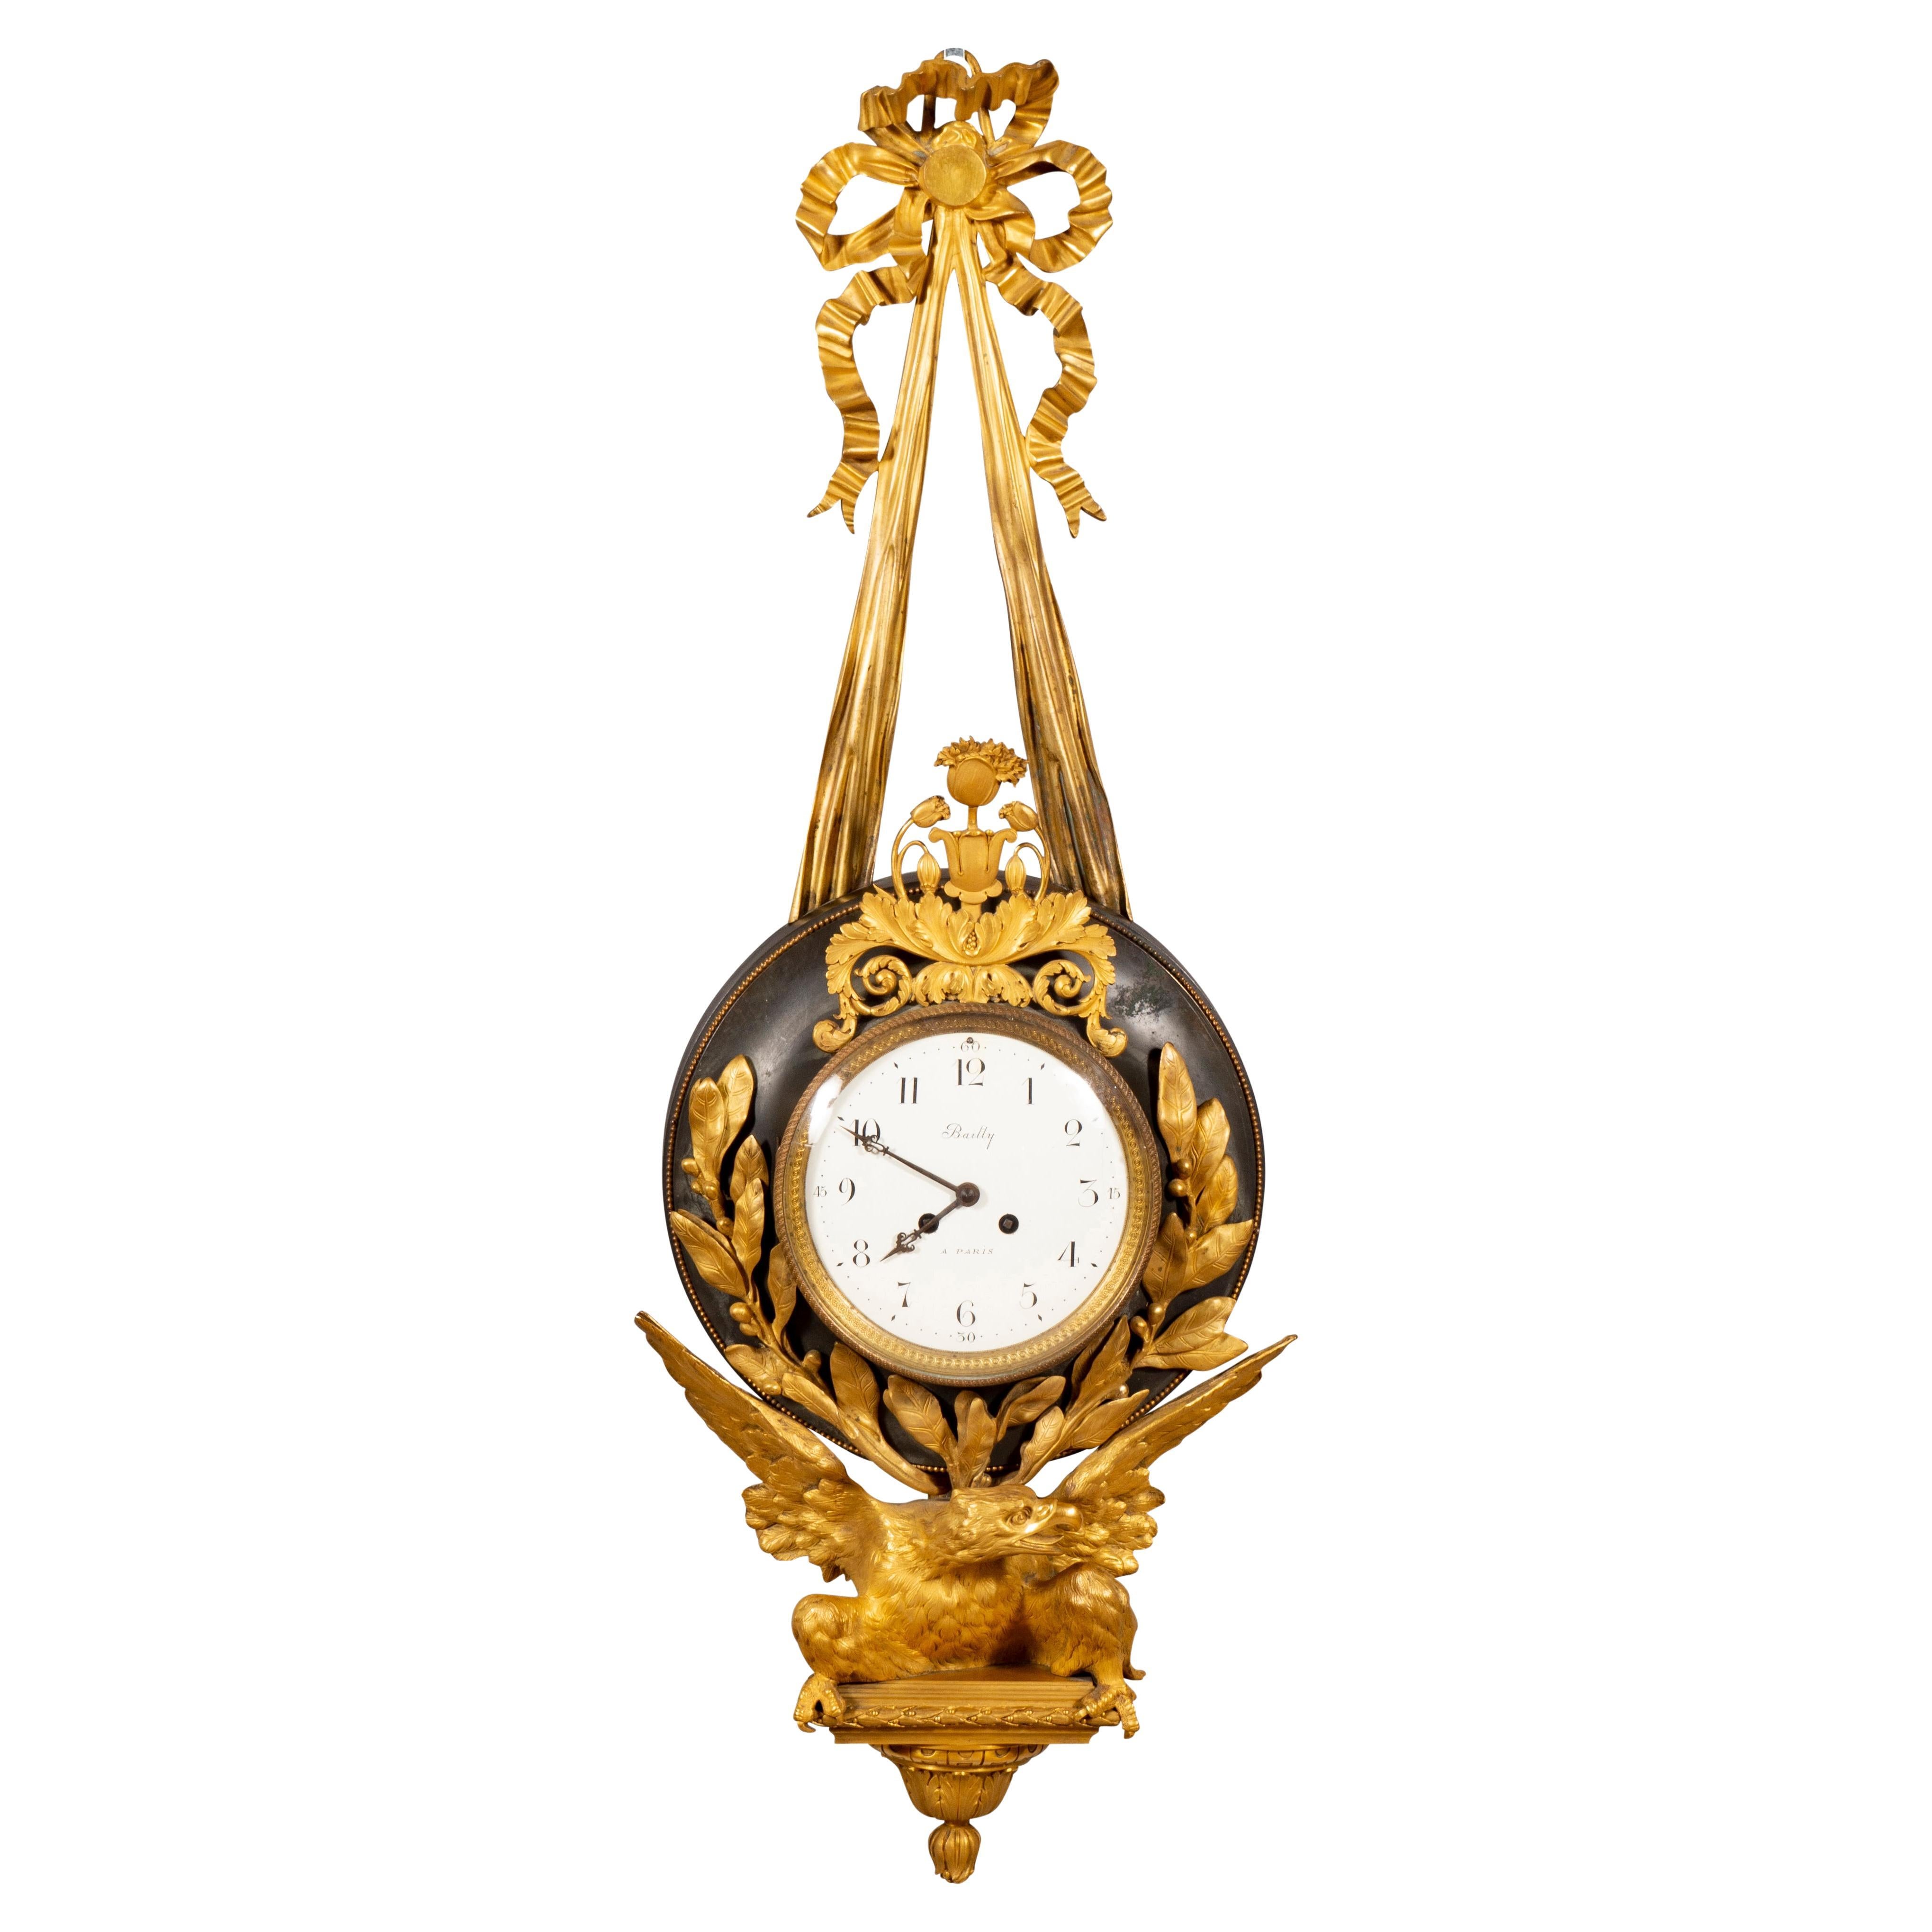 Empire Bronze and Ormolu Cartel Clock by Bailly, Paris